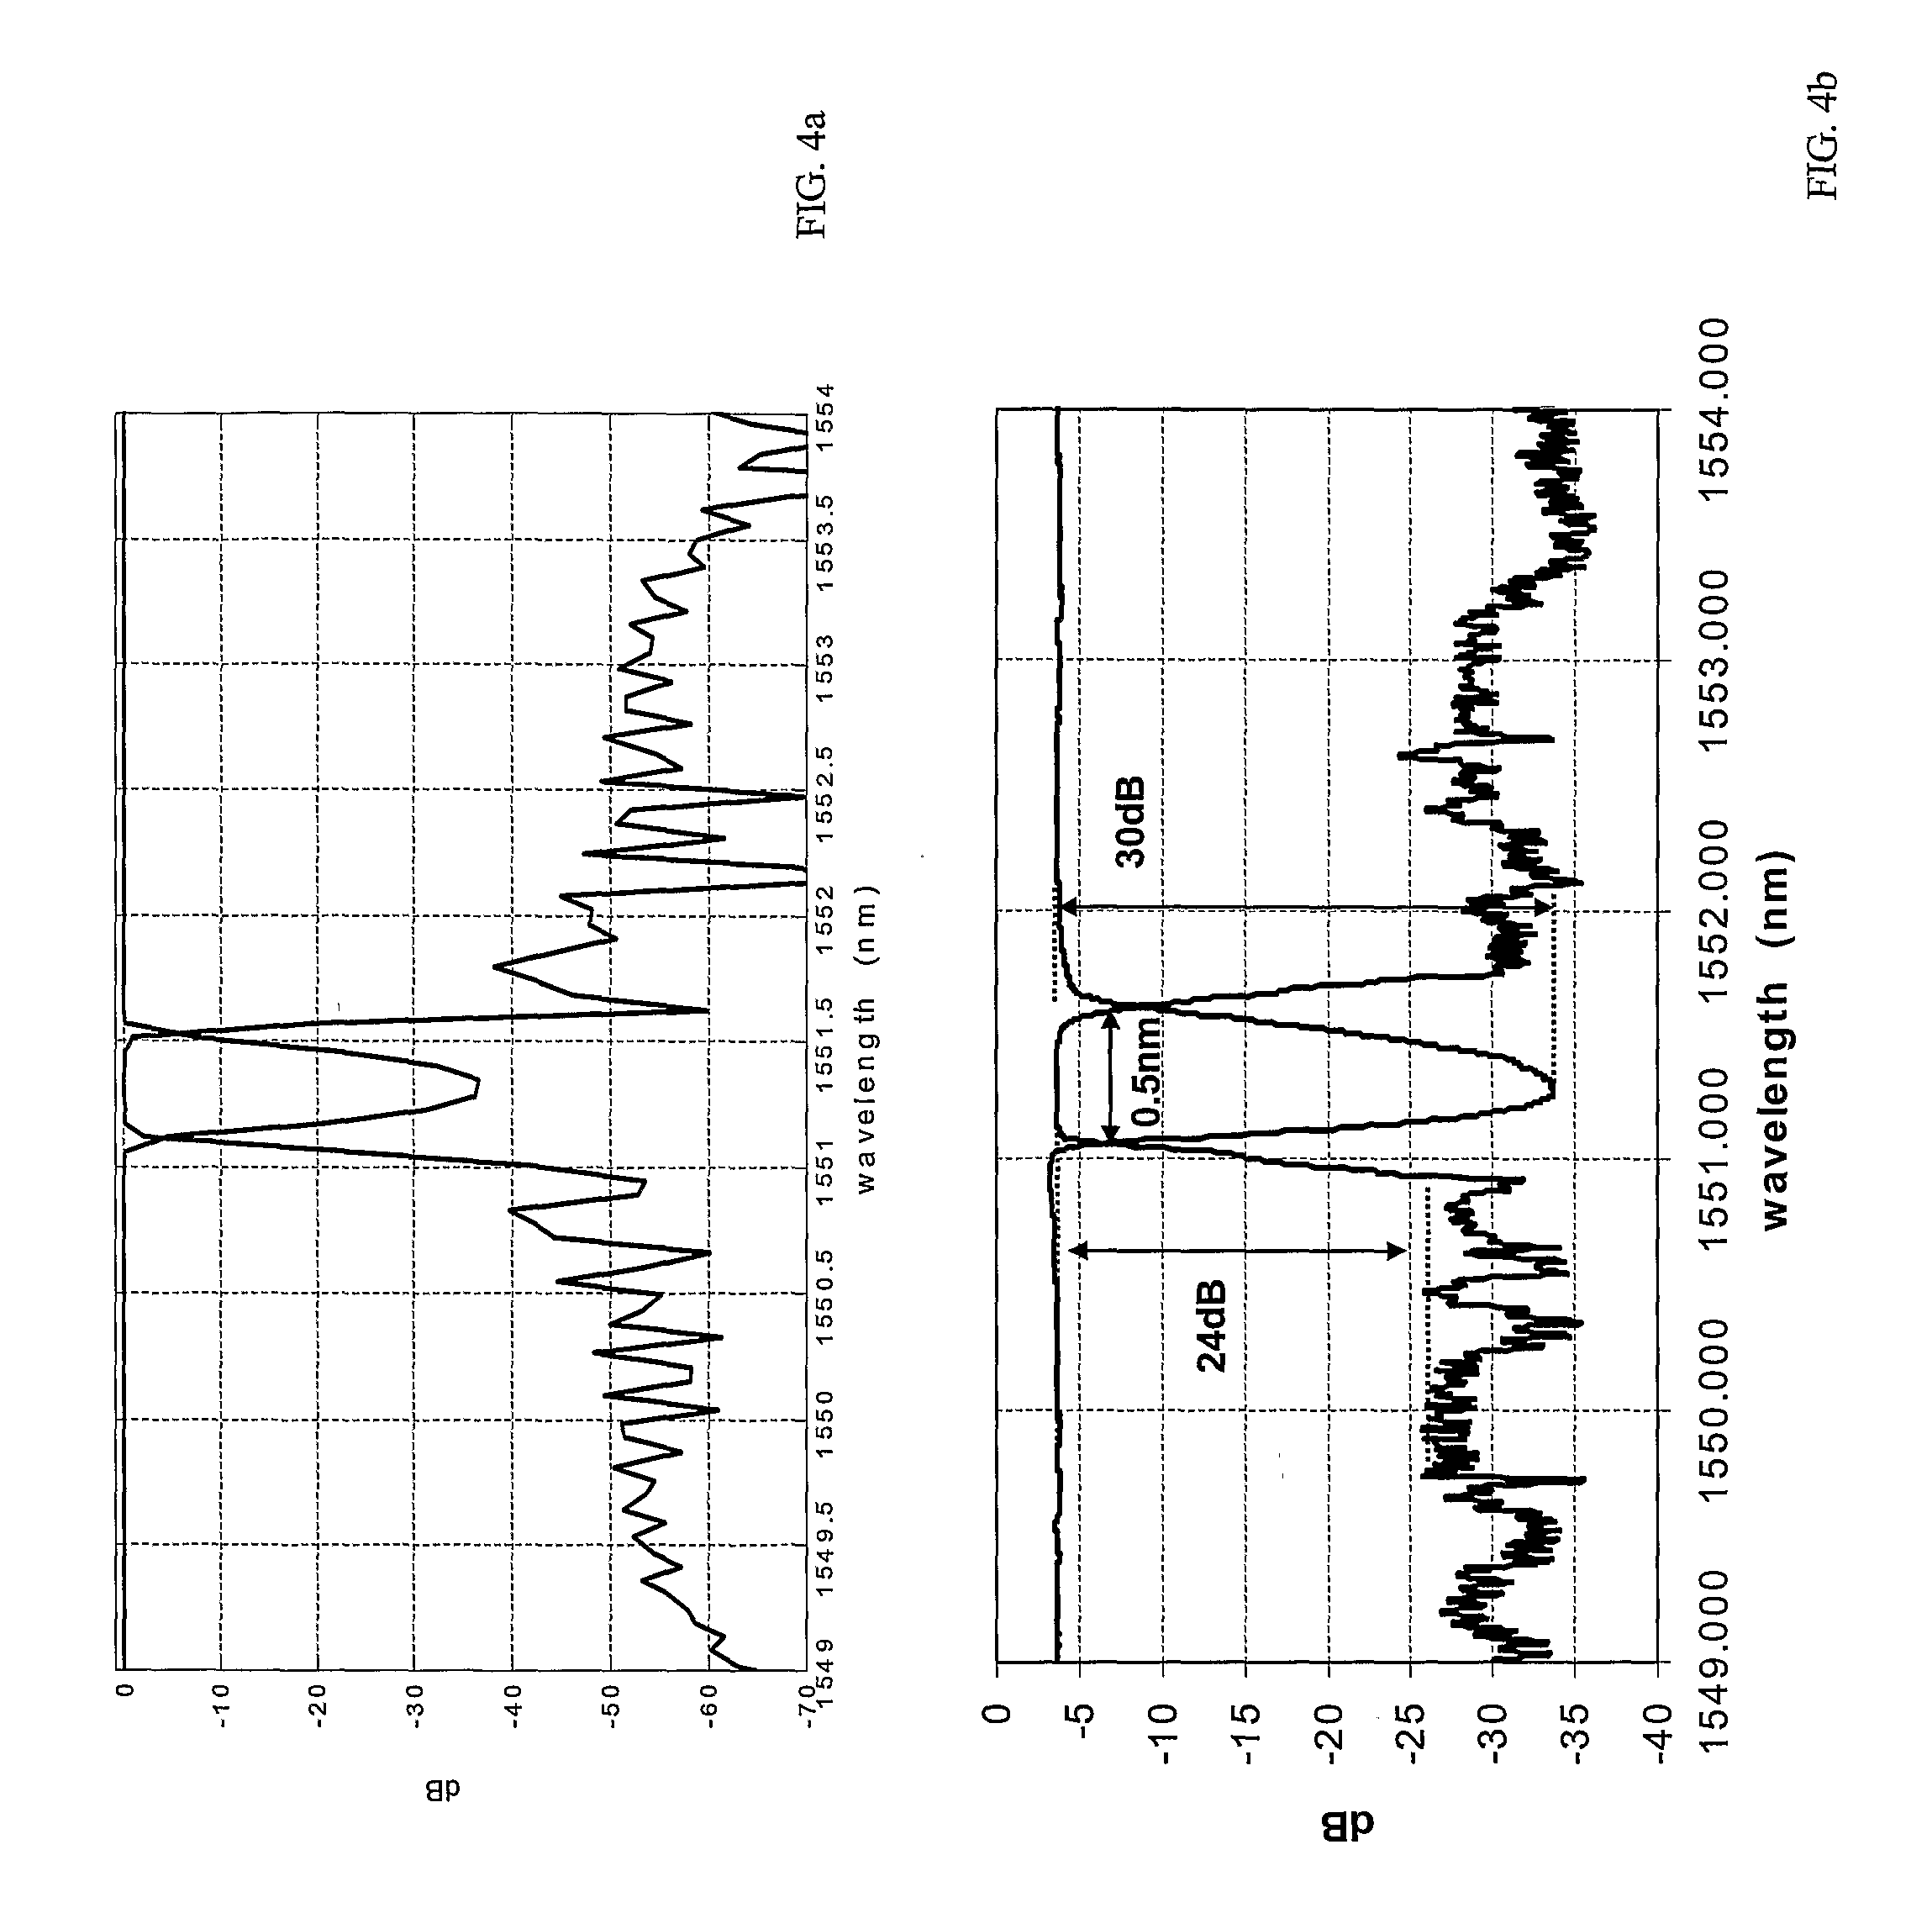 Integrated wavelength selective grating-based filter